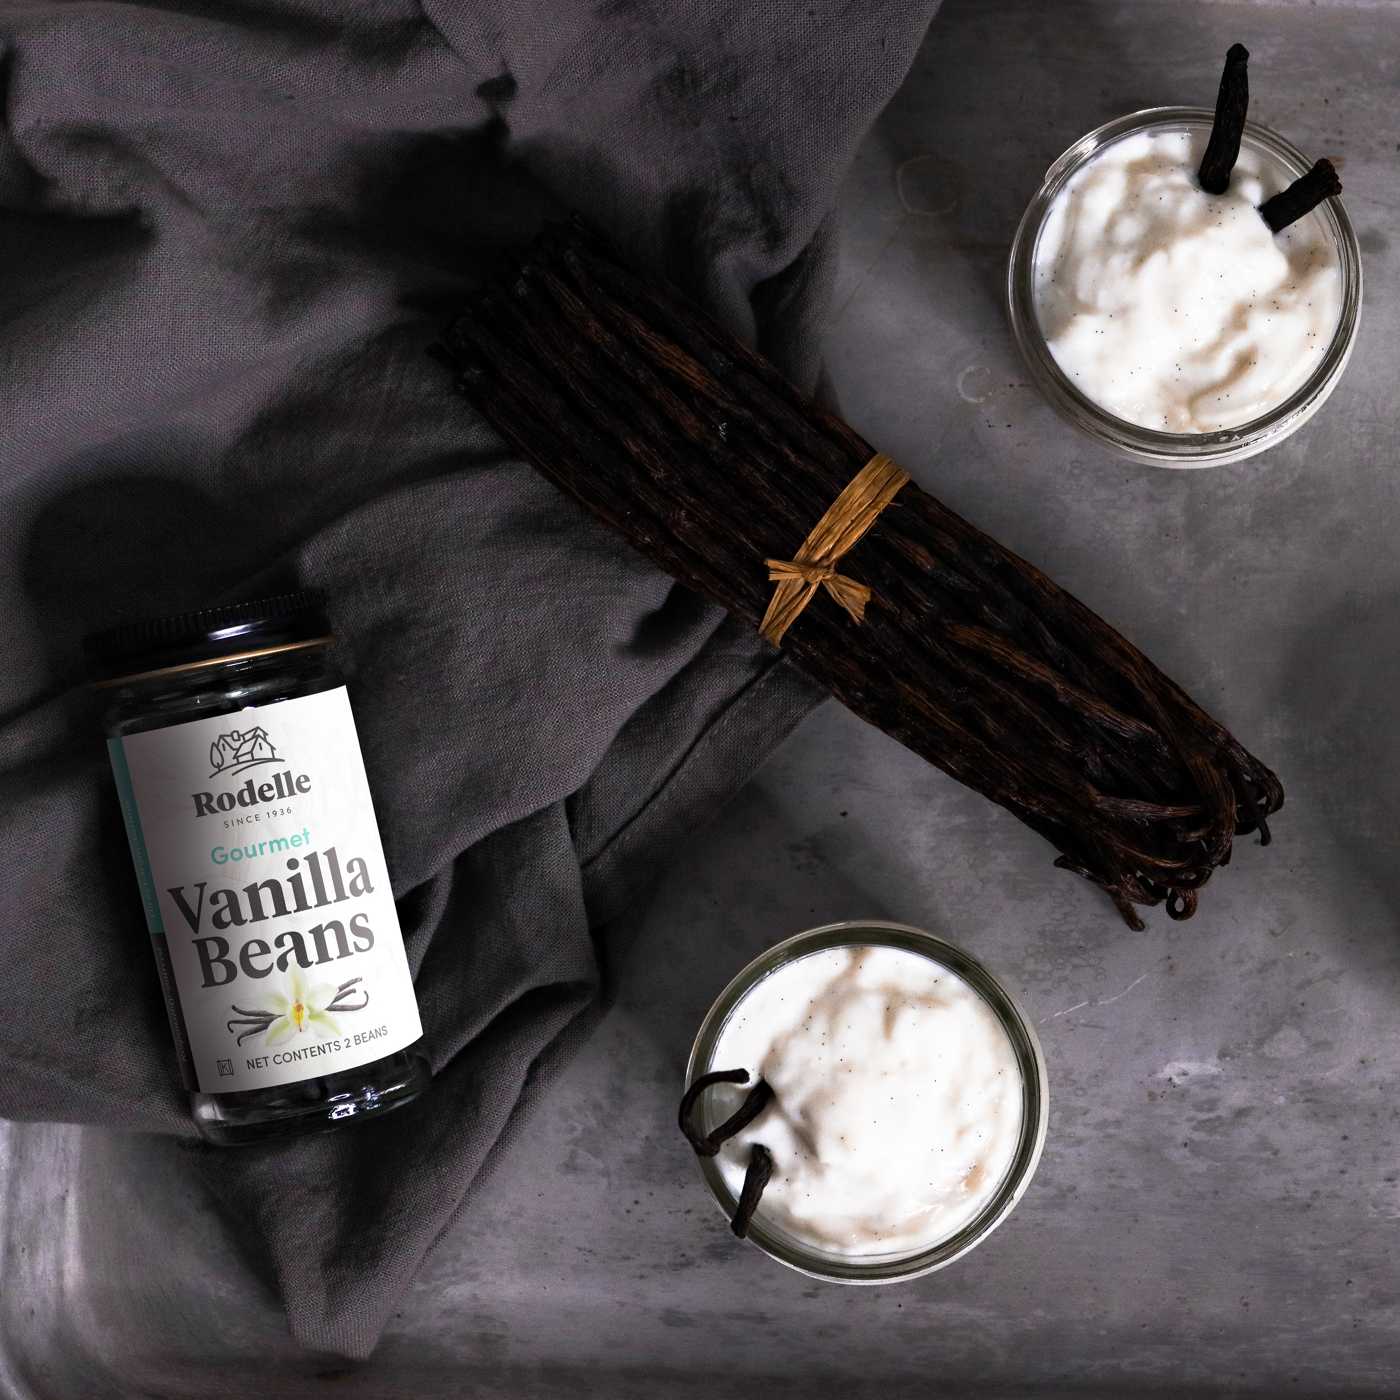 Rodelle Gourmet Vanilla Beans; image 5 of 5